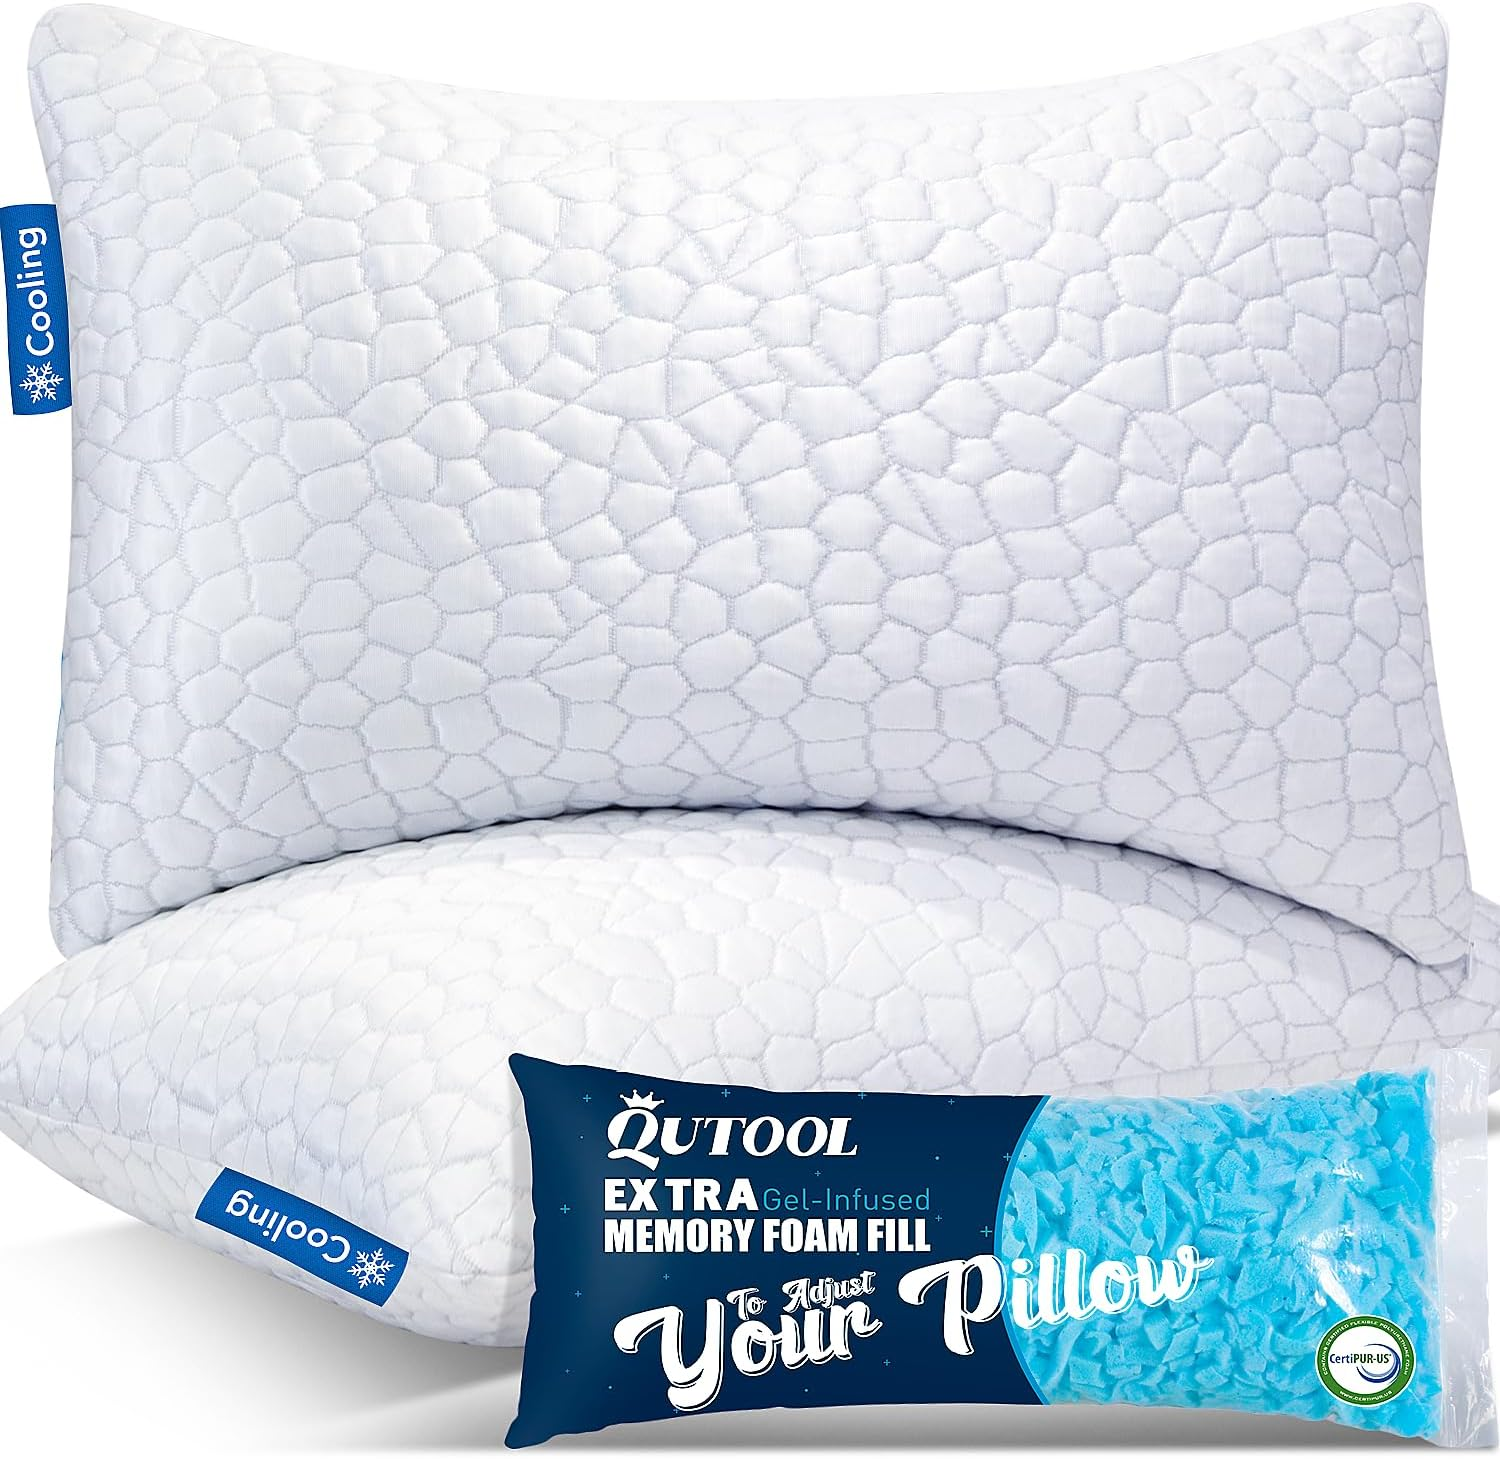 Qutool Memory Foam Back Lumbar Support Pillow Review! 